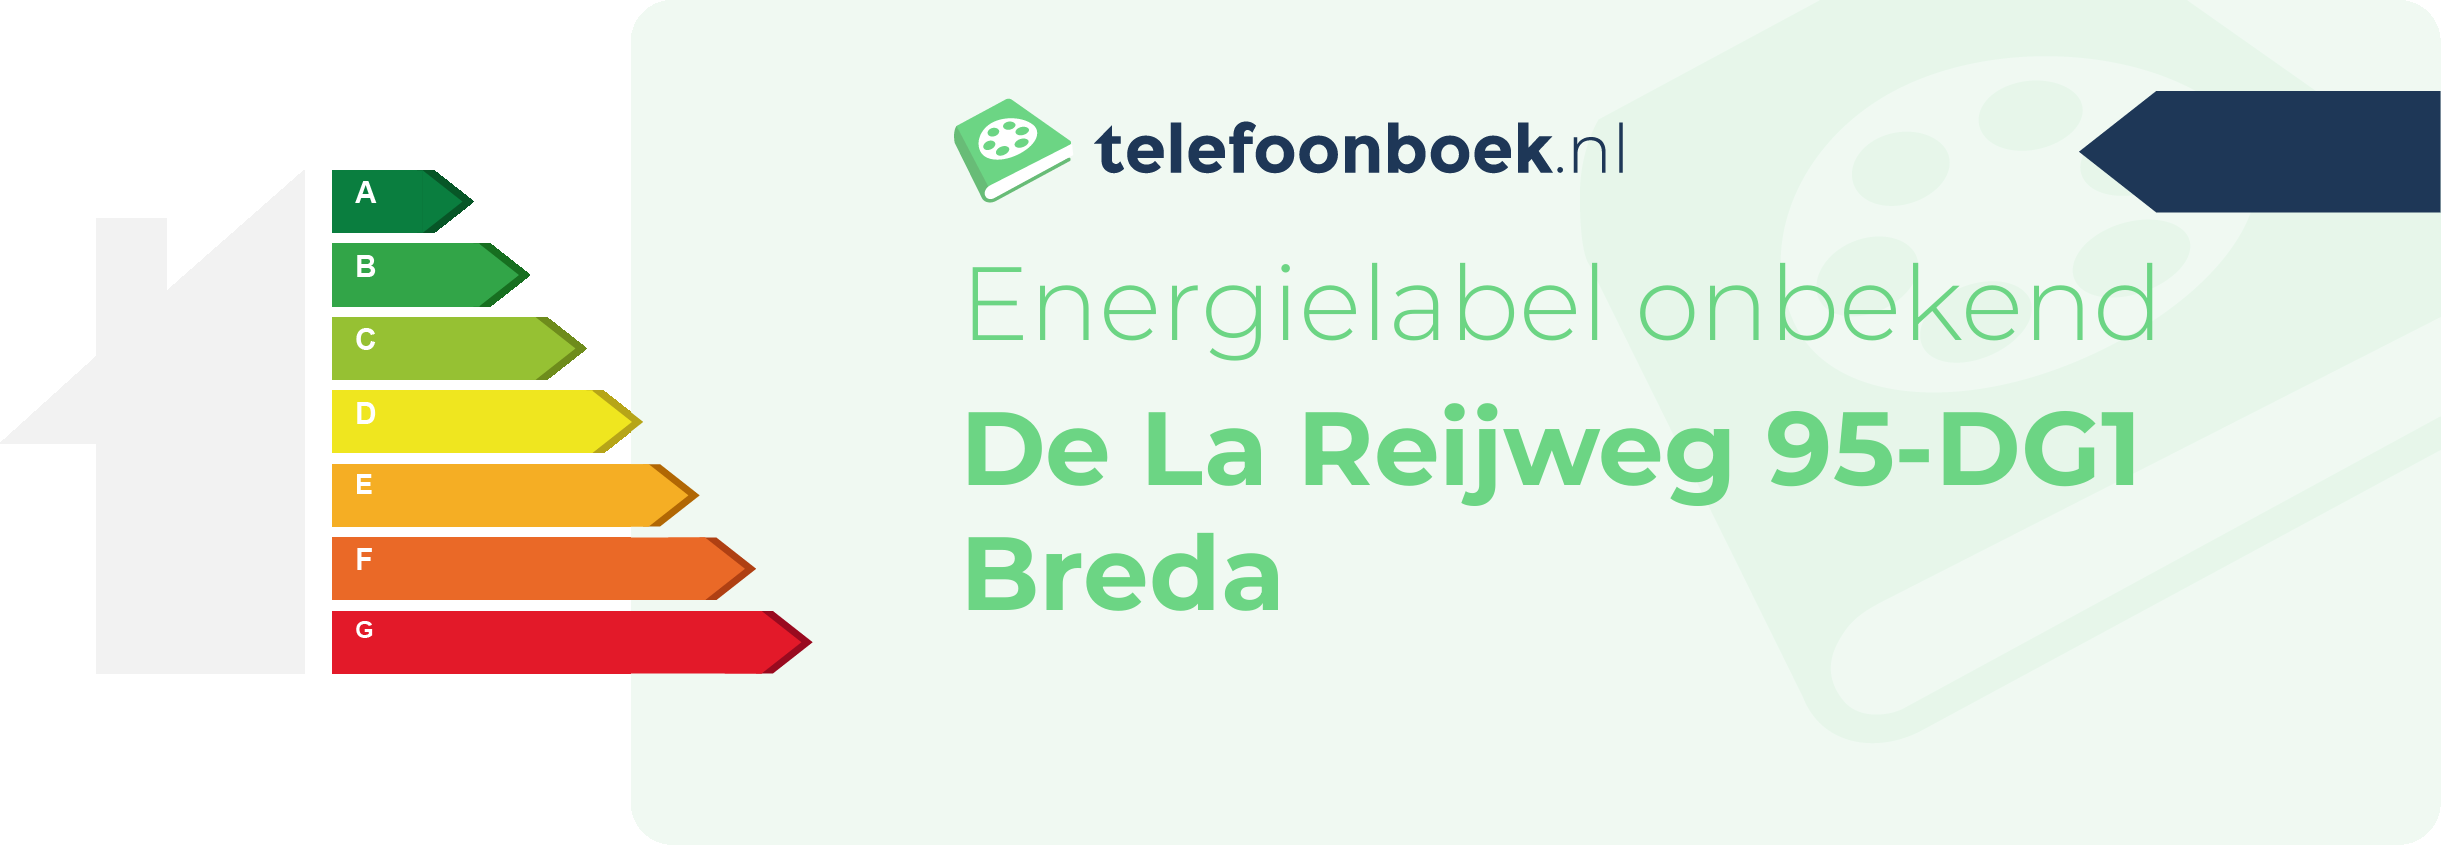 Energielabel De La Reijweg 95-DG1 Breda